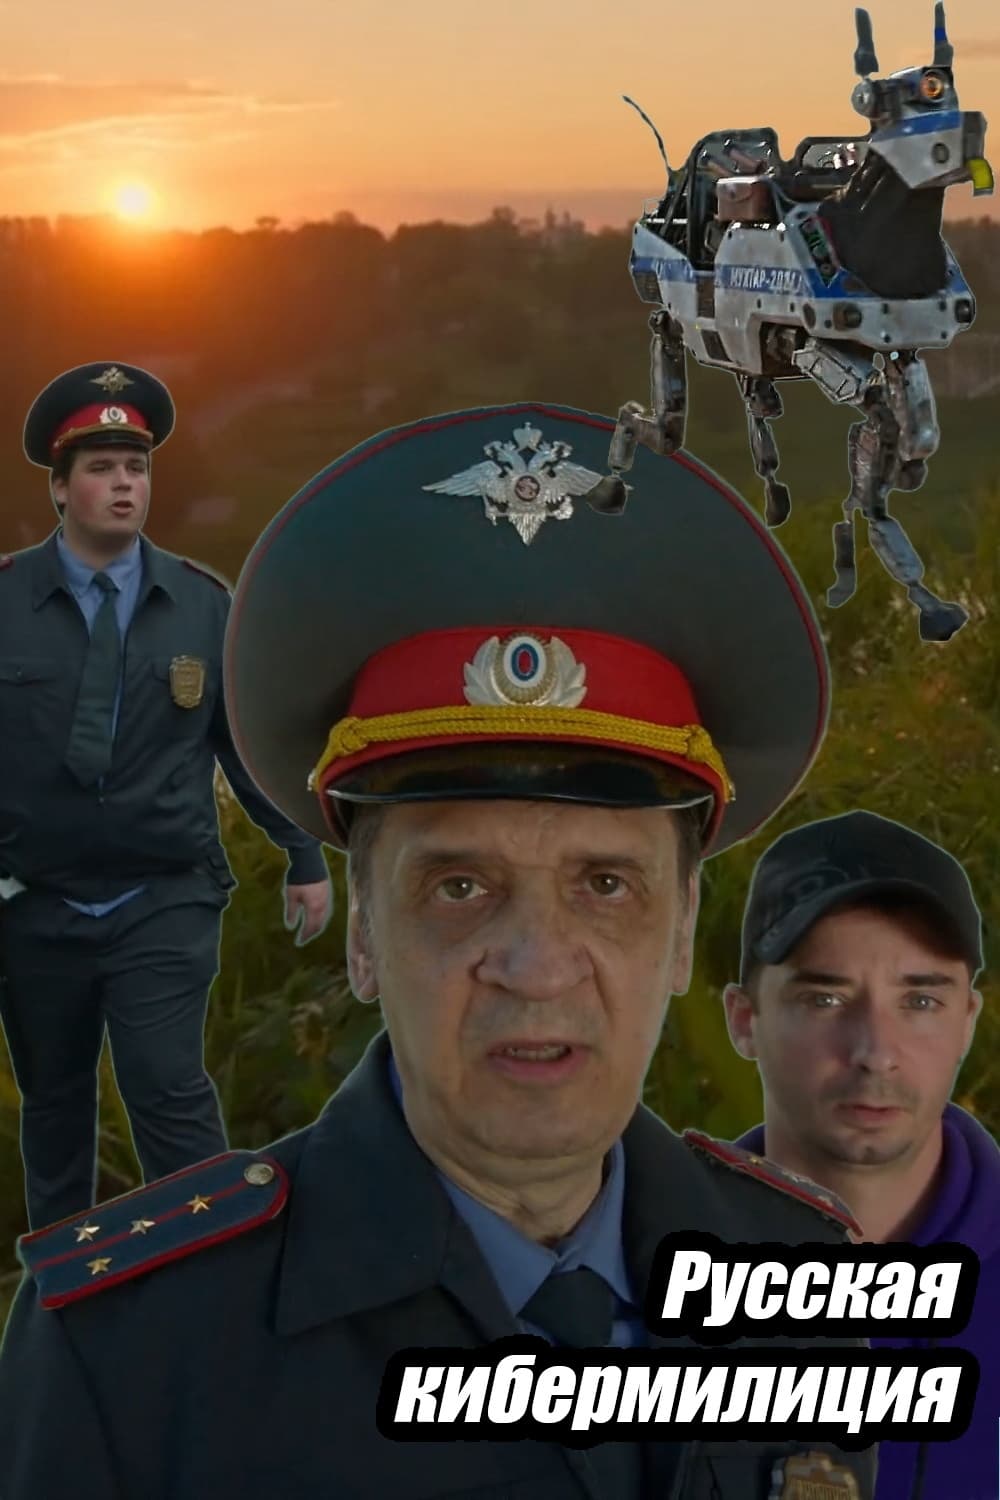 Russian Cyberpolice